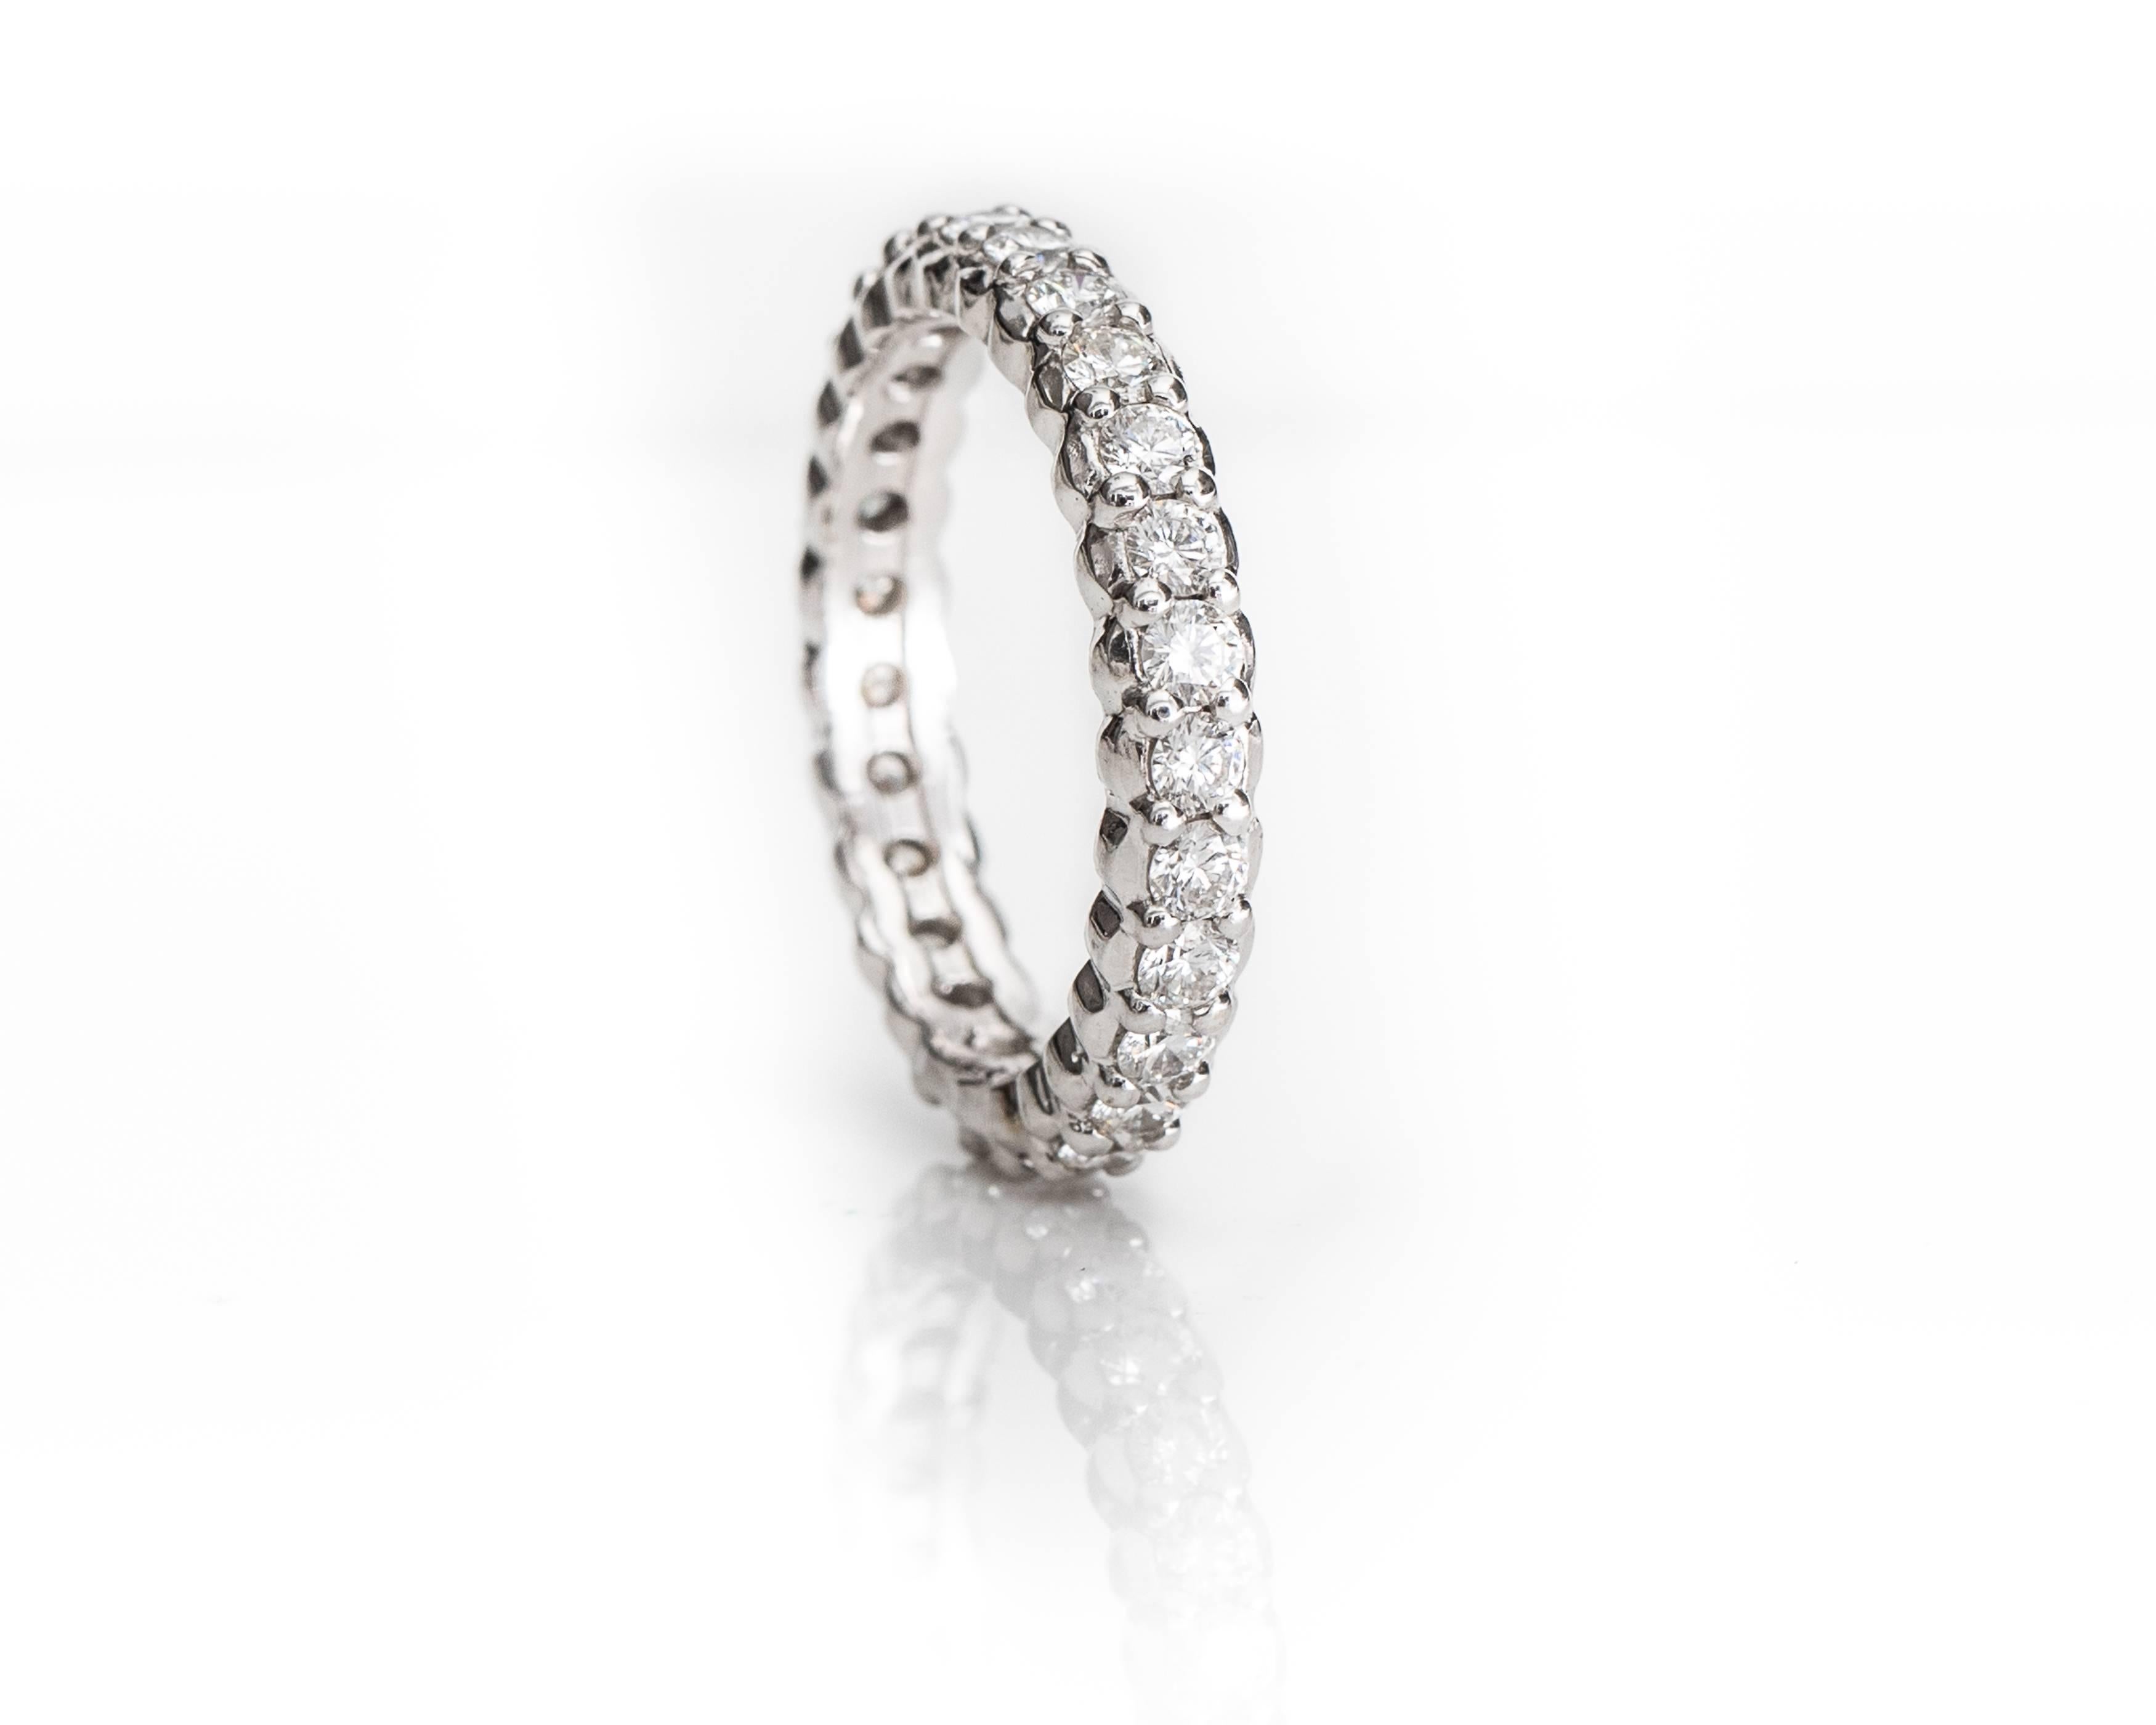 1.5 carat eternity ring